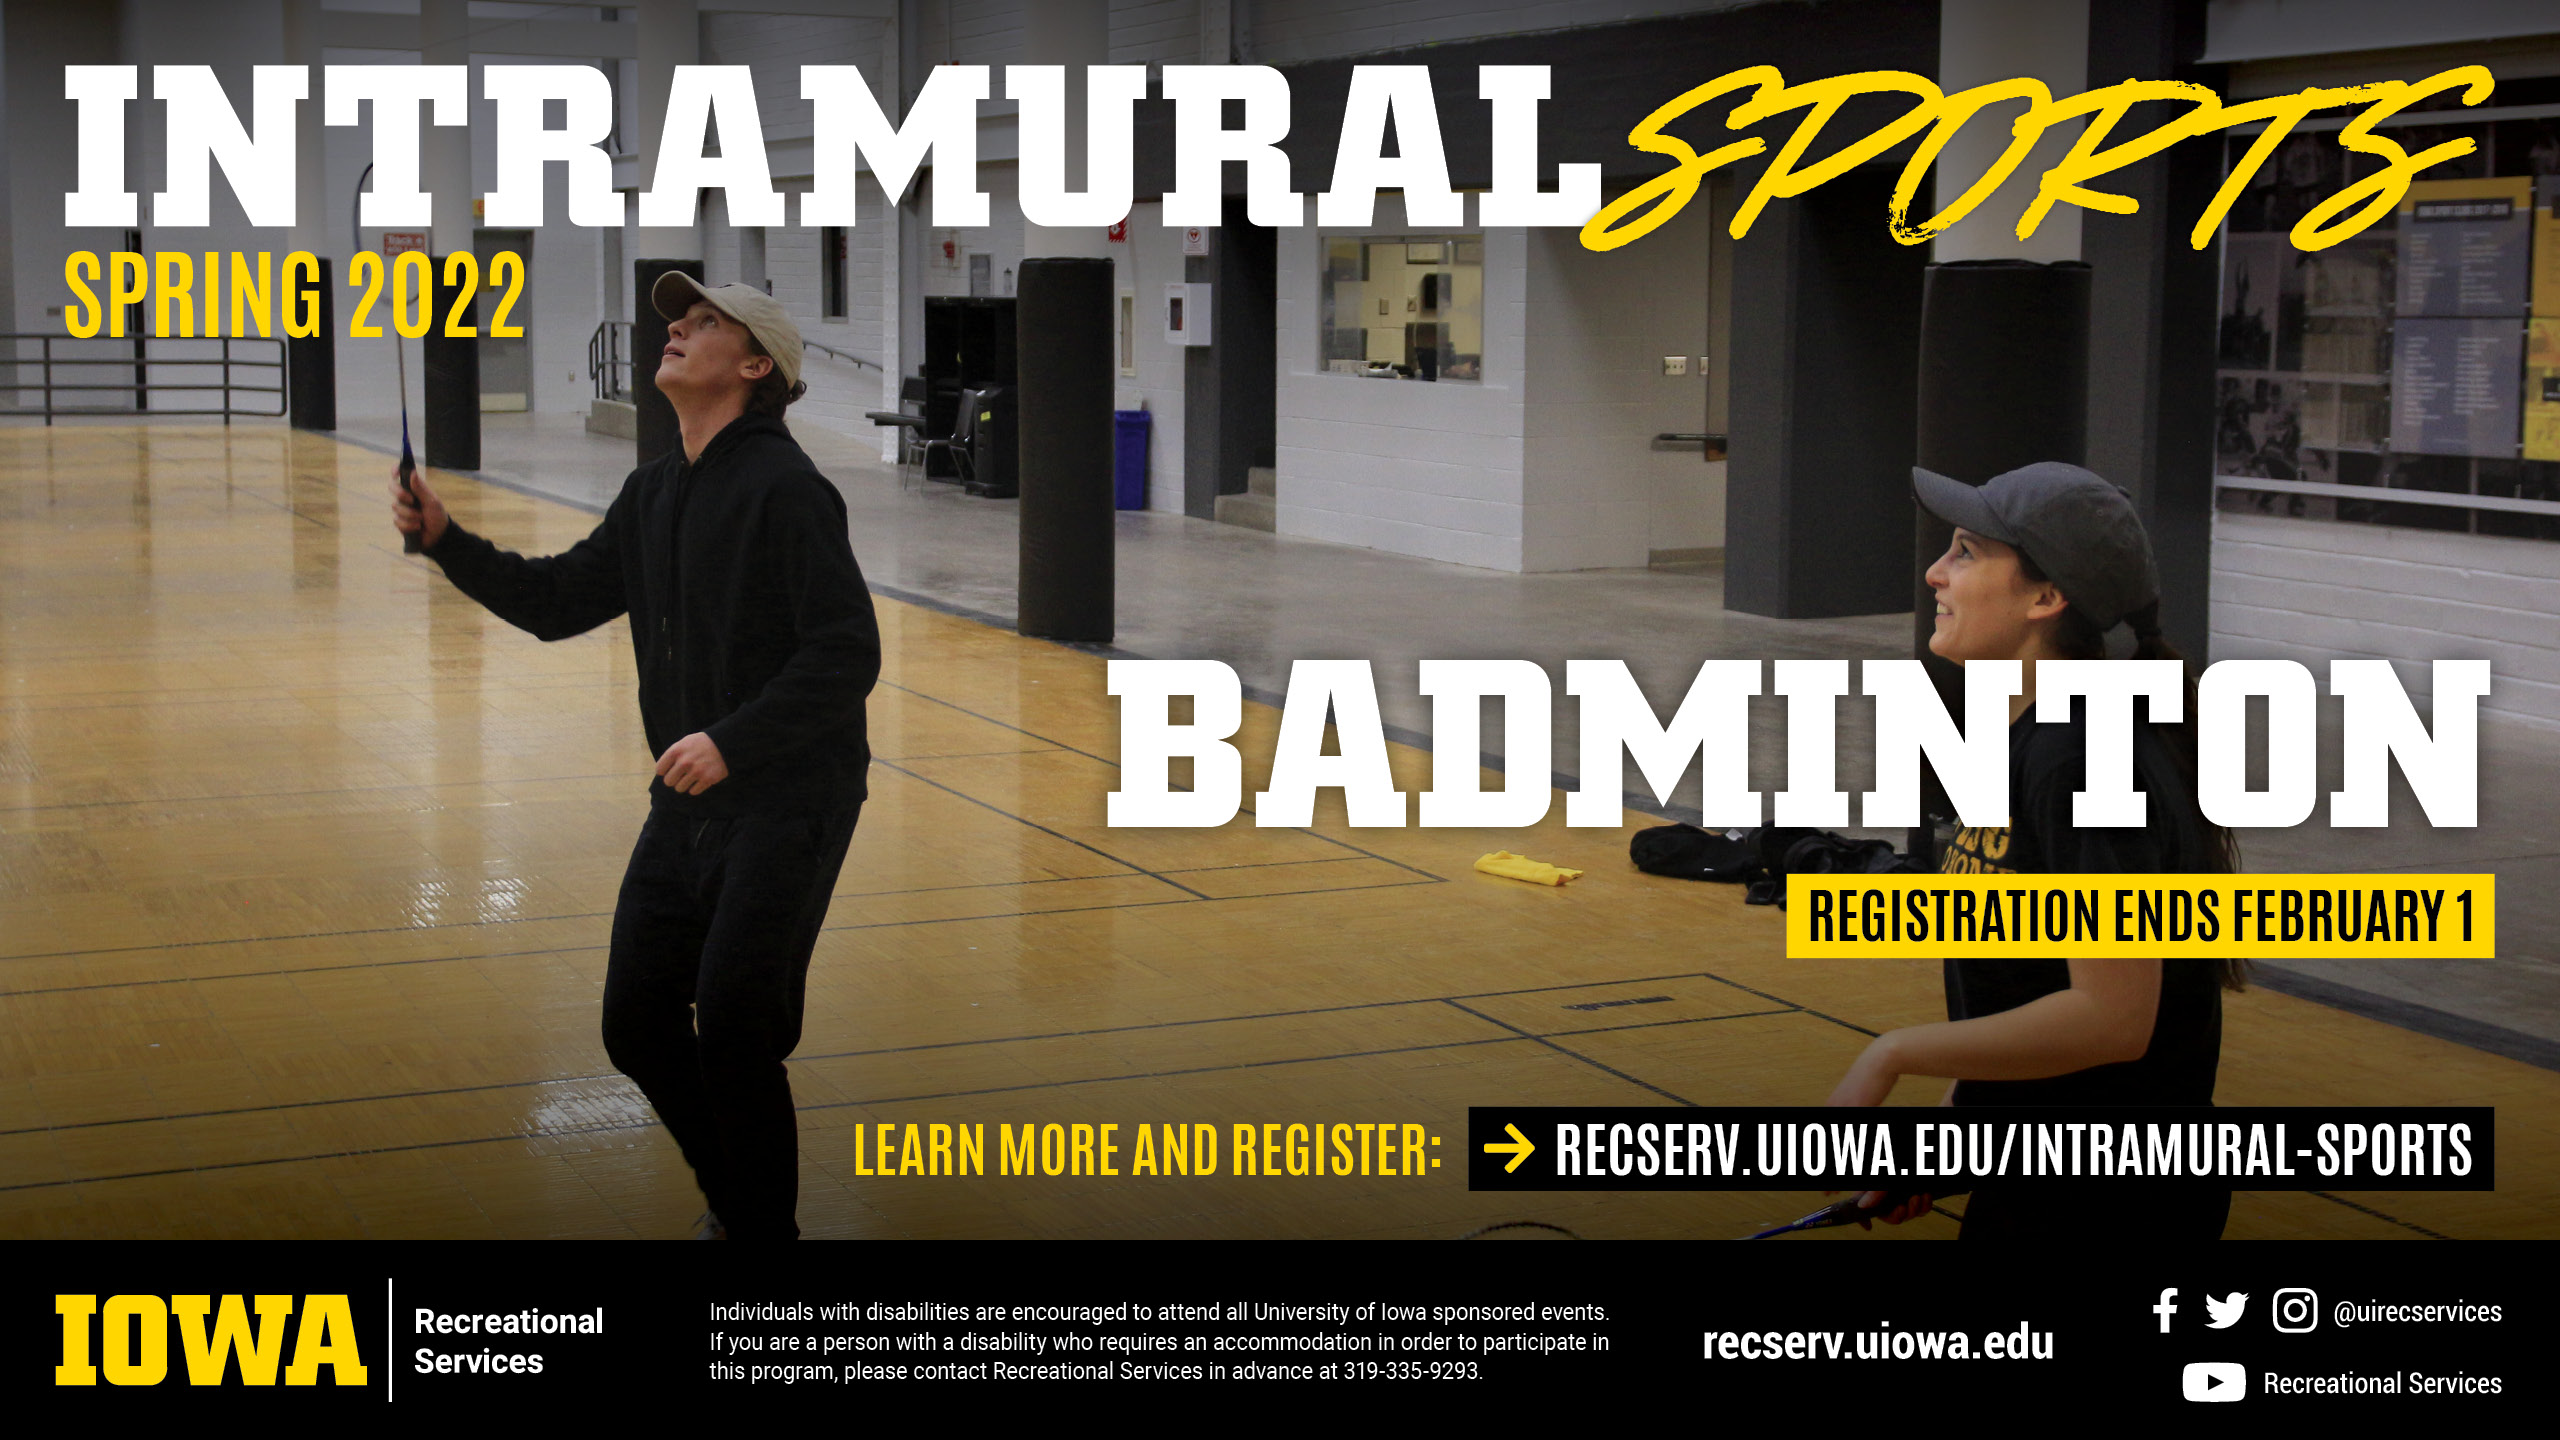 Intramural Sports Spring 2022 Badminton Registration ends February 1 learn more and register at: recserv.uiowa.edu/intramural-sports